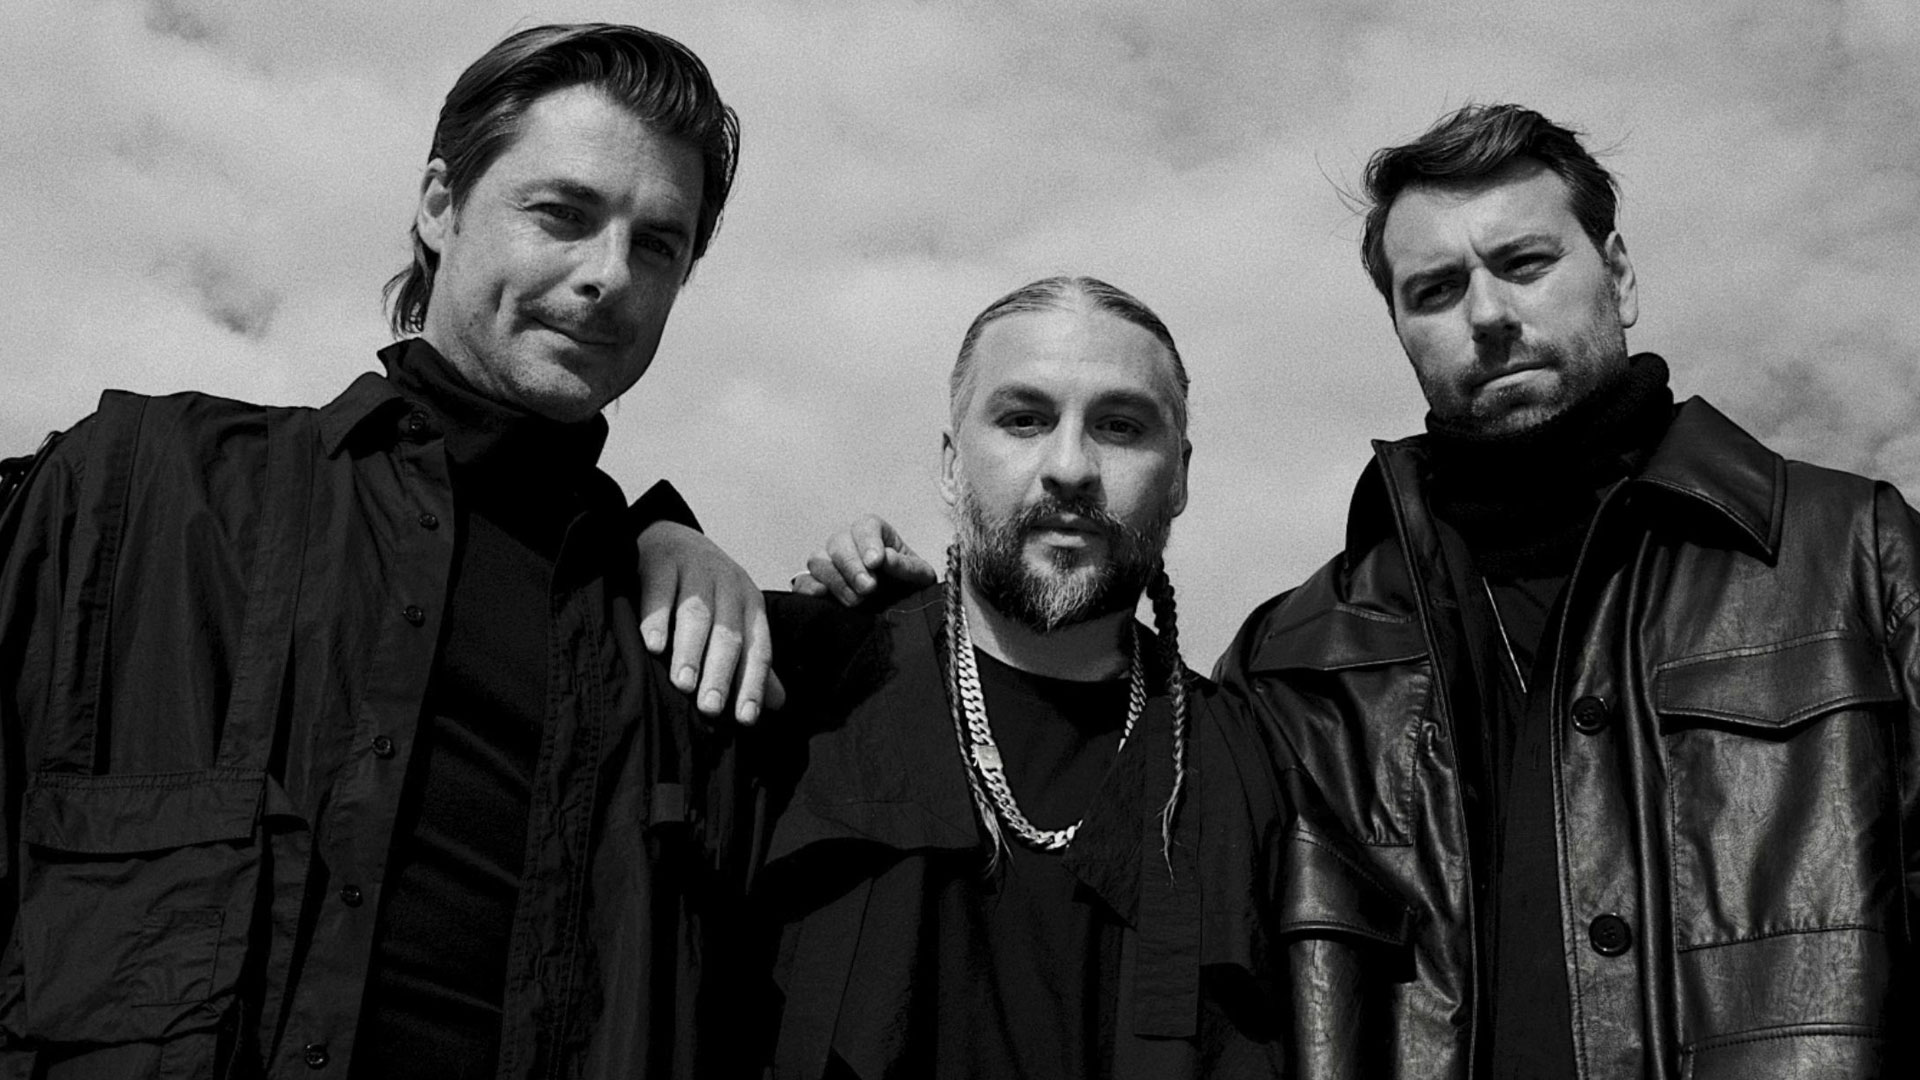 Swedish DJs & producers trio Axwell, Steve Angello & Sebastian Ingrosso aka The Swedish House Mafia